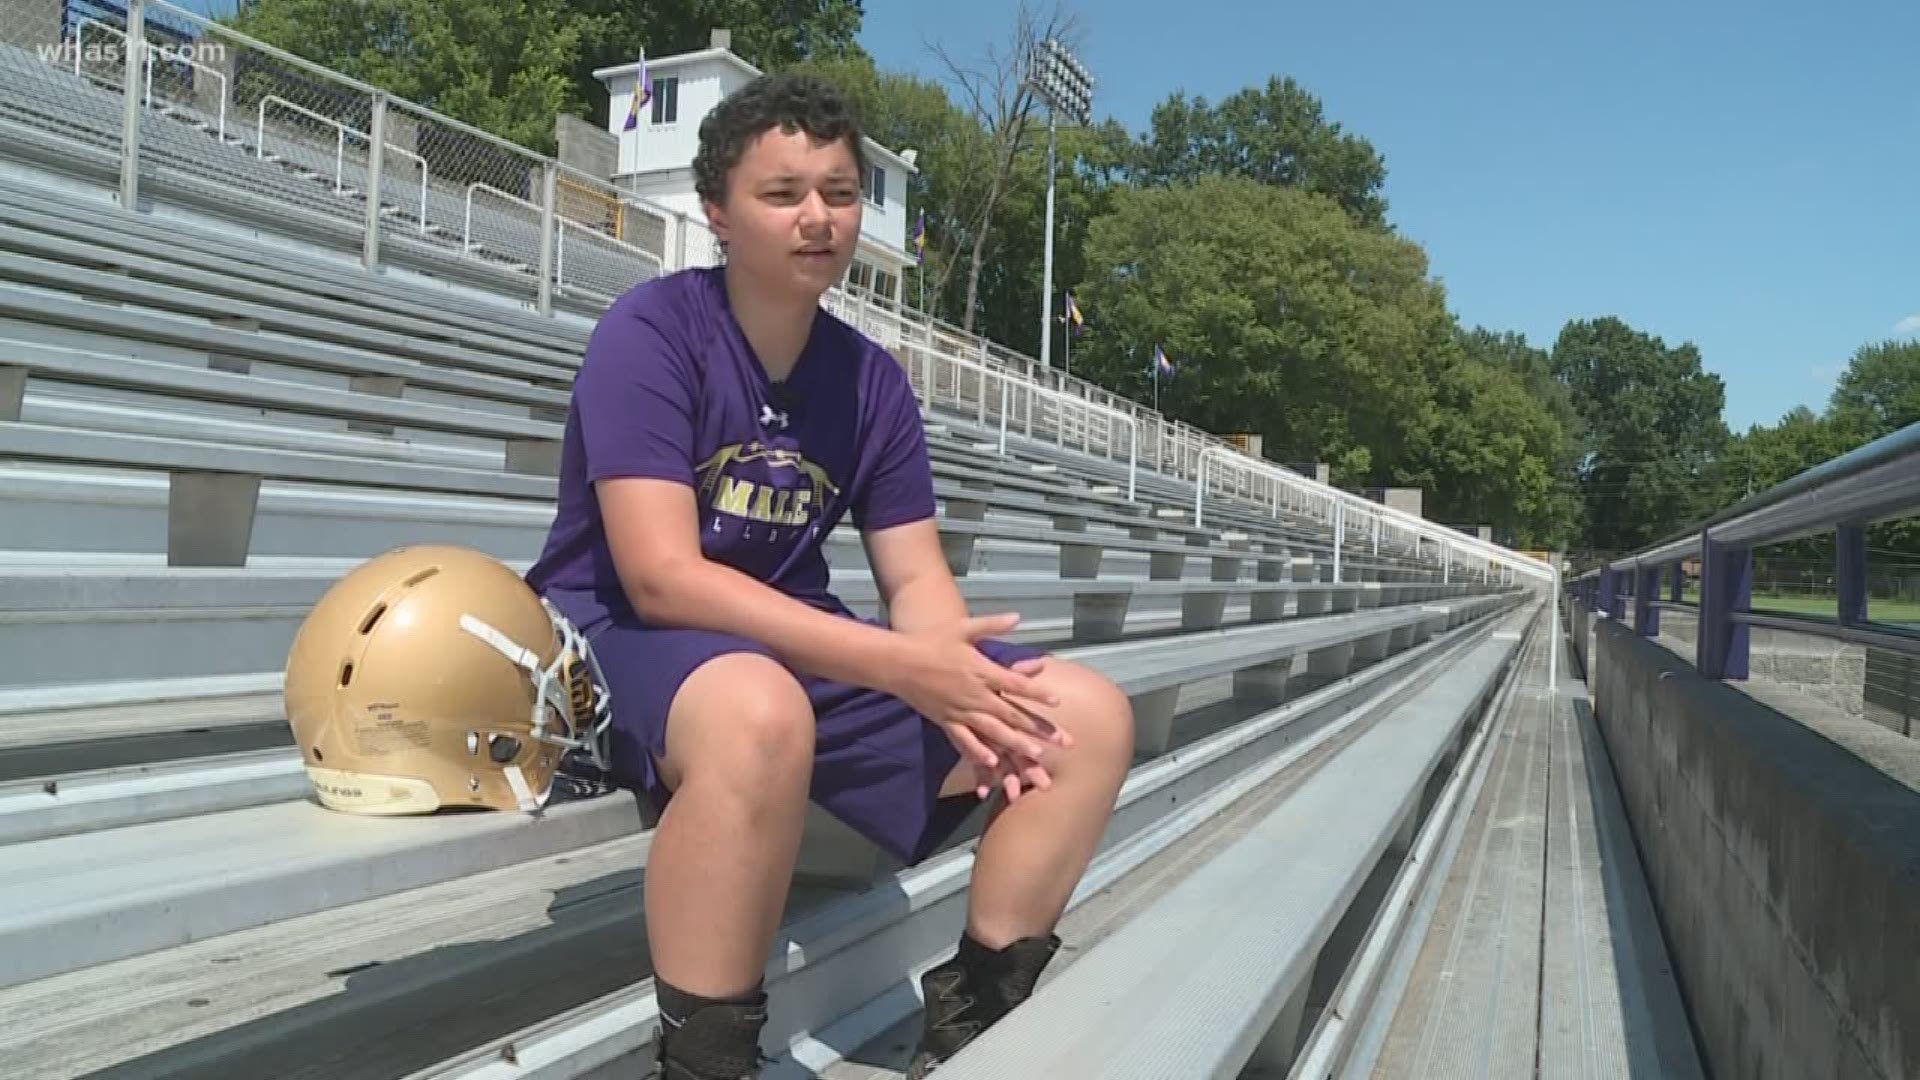 Male High School Football Player beats cancer, returns to field